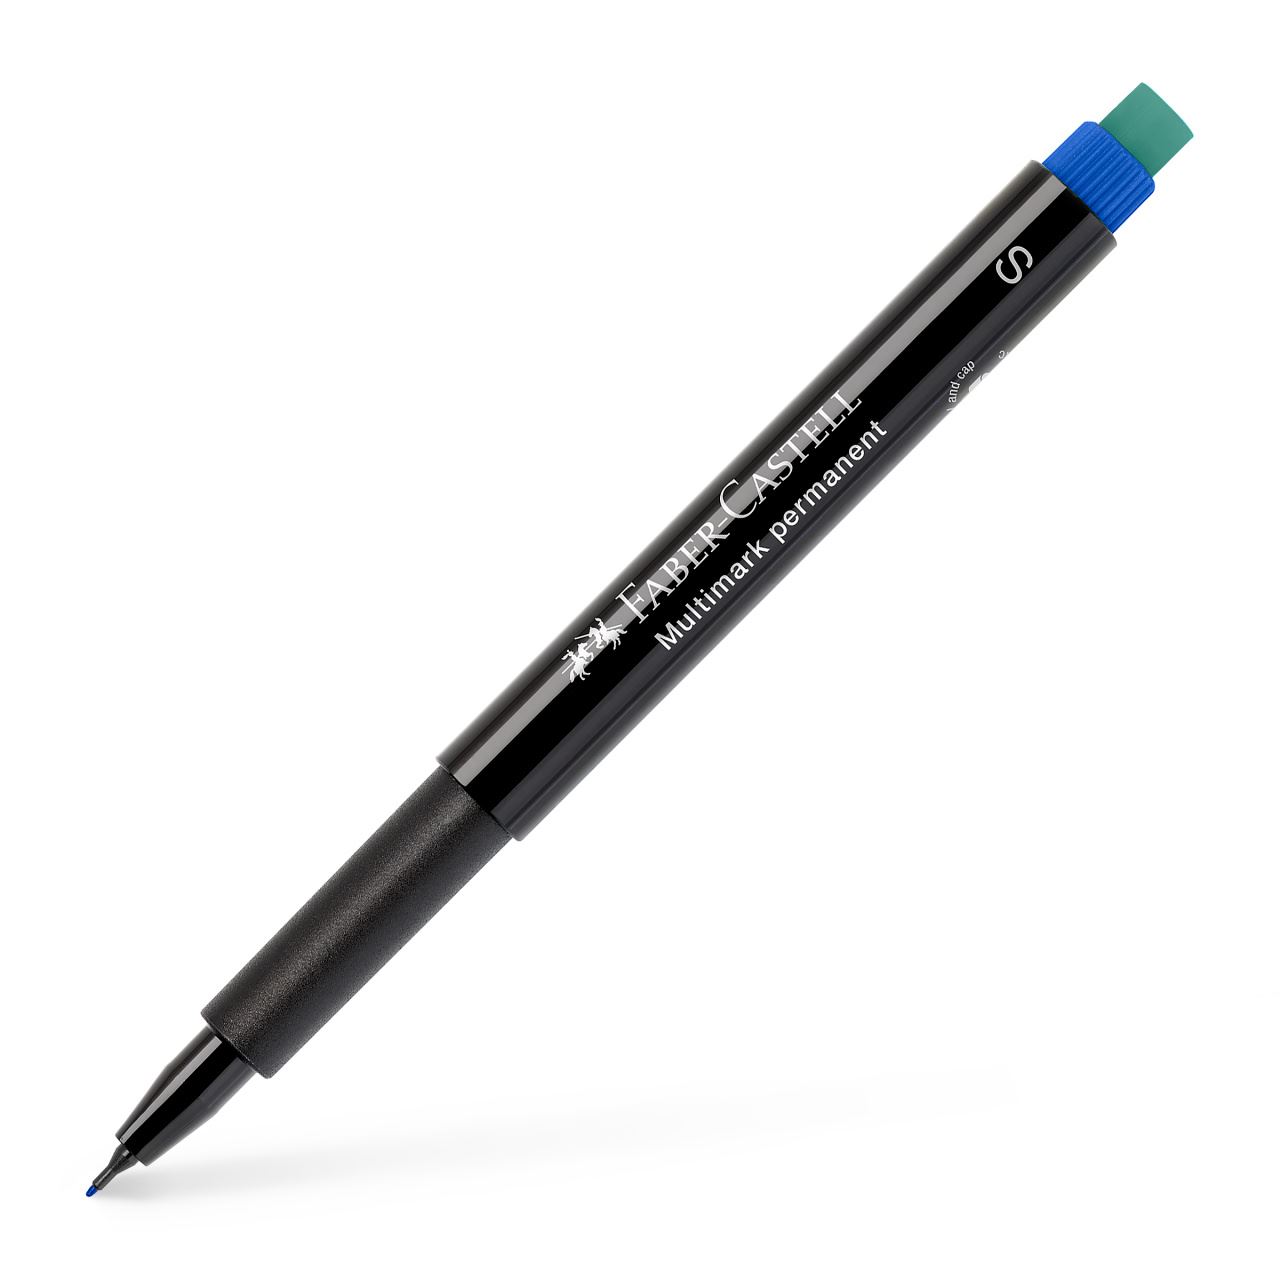 Faber-Castell - Marker Multimark permanente Sfine blu